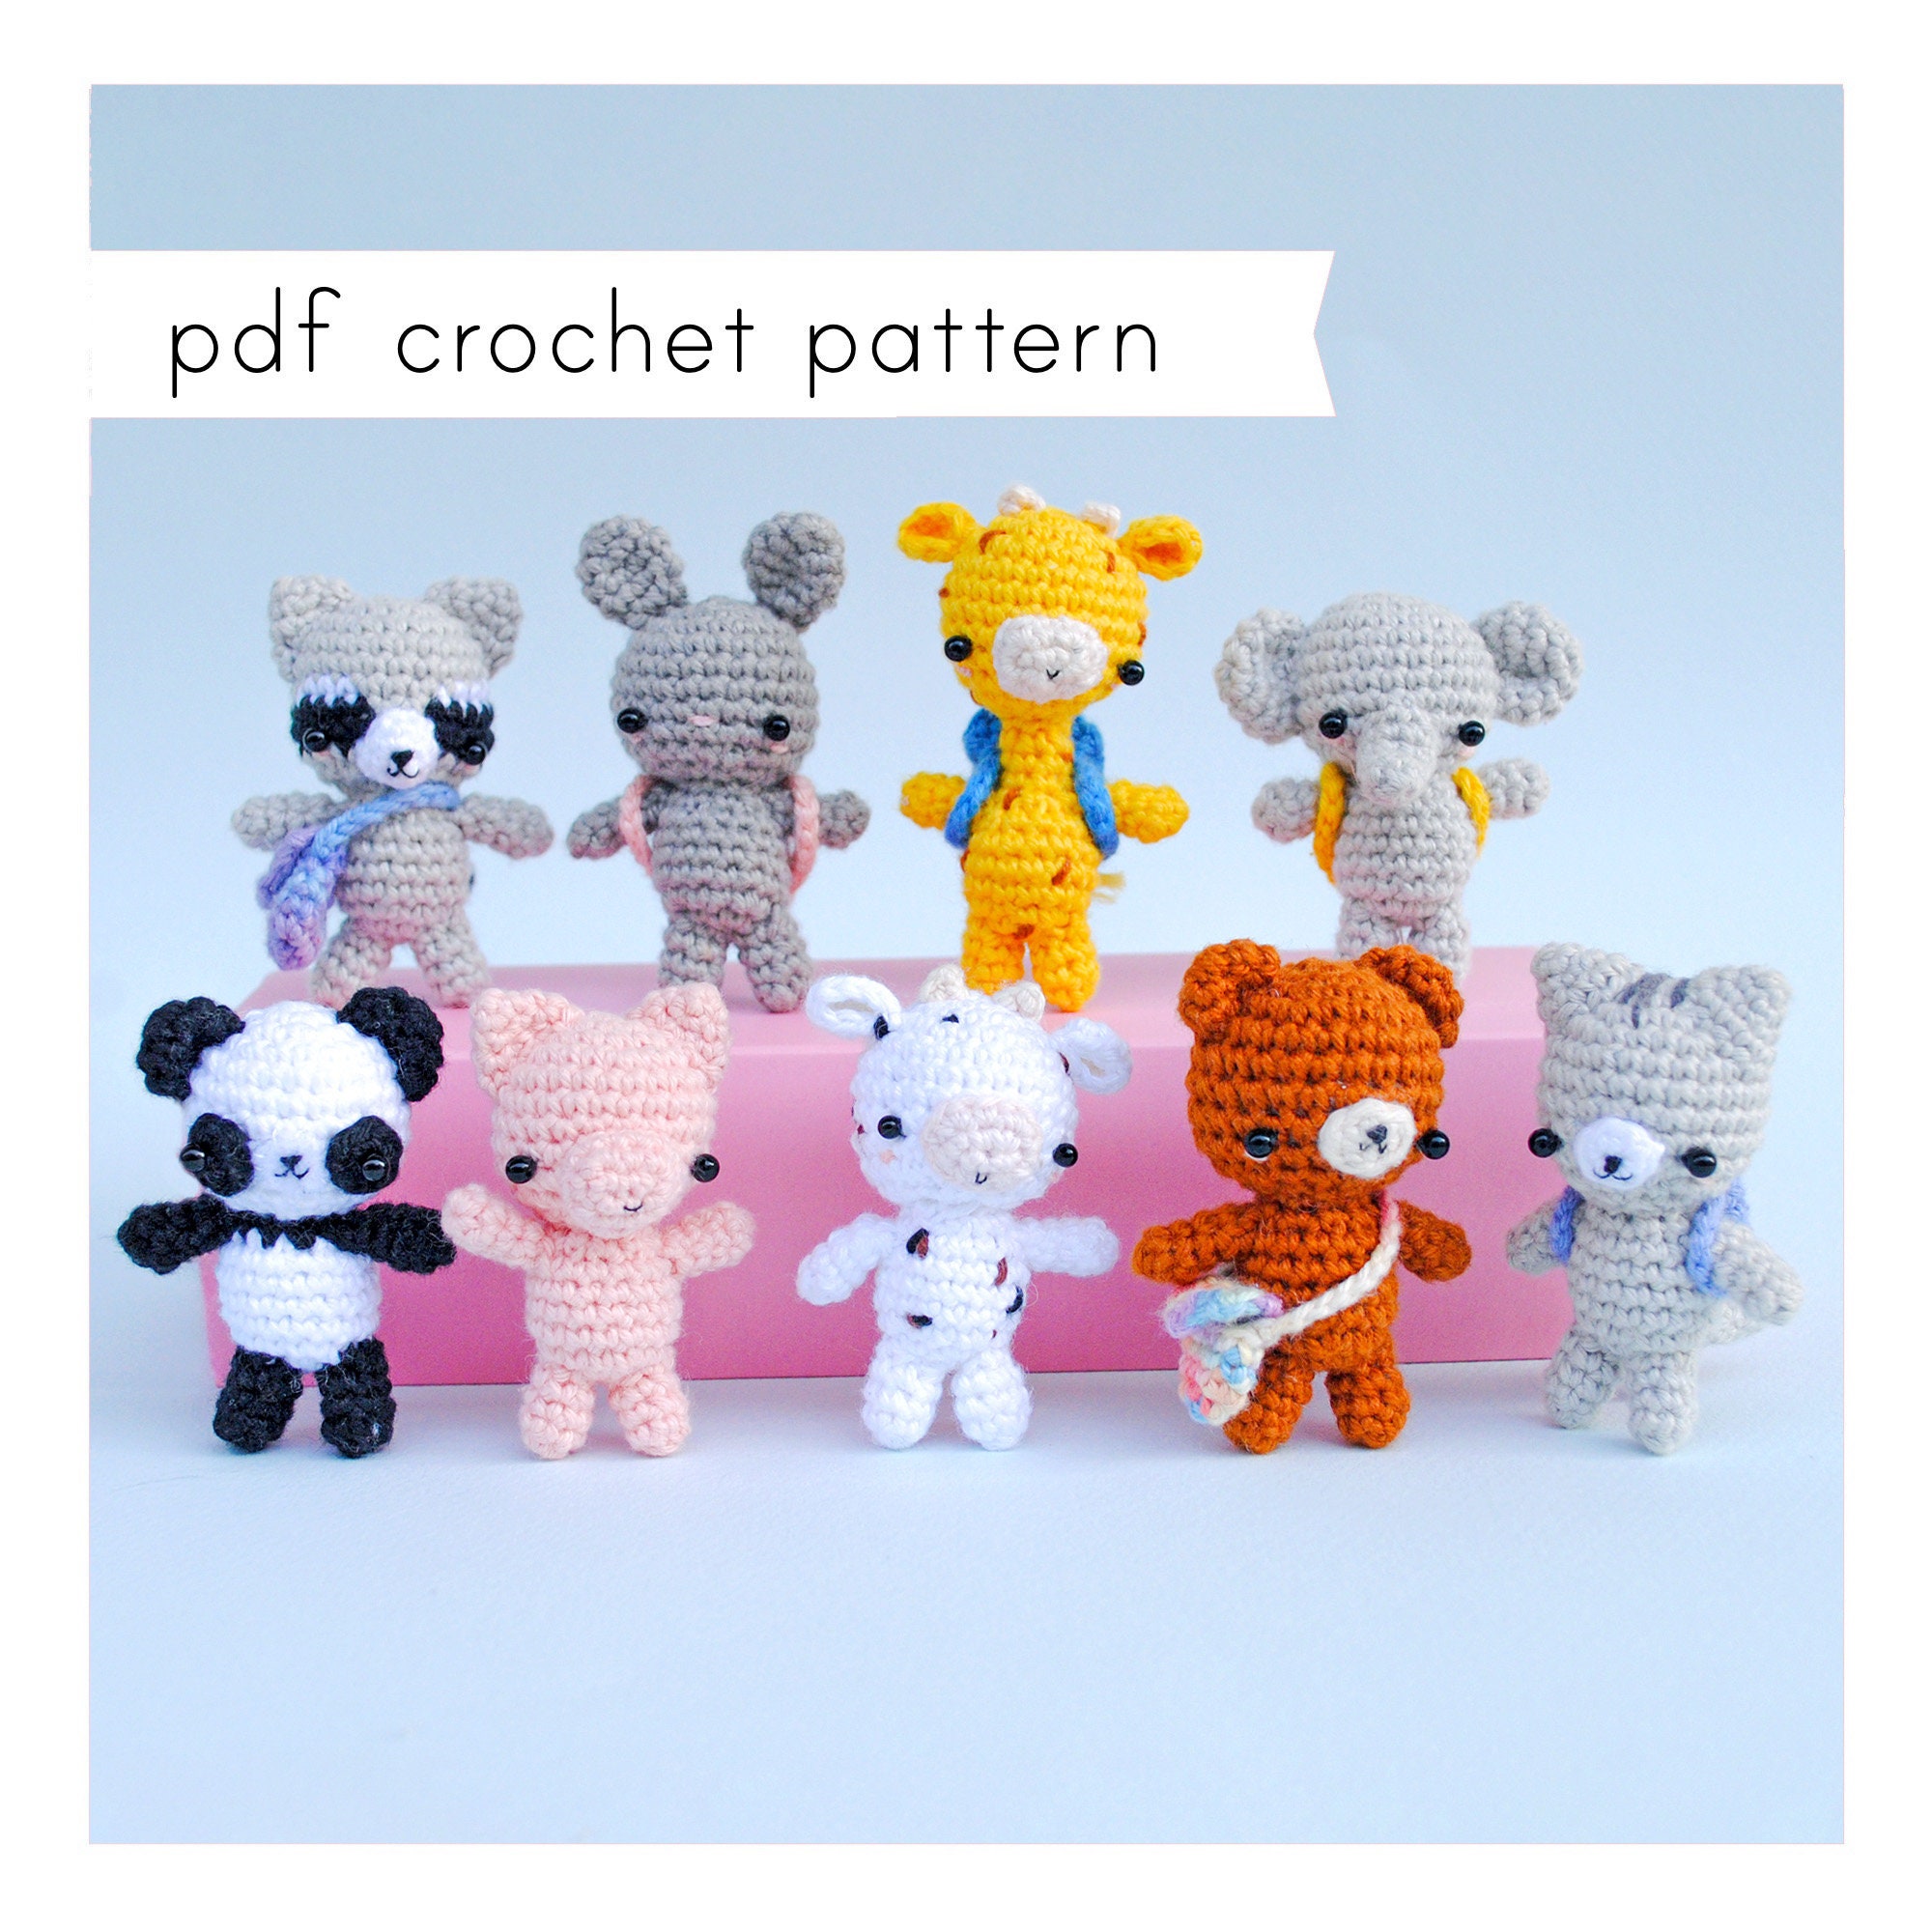 Mini Amigurumi Animals: 26 Tiny Creatures to Crochet [Book]